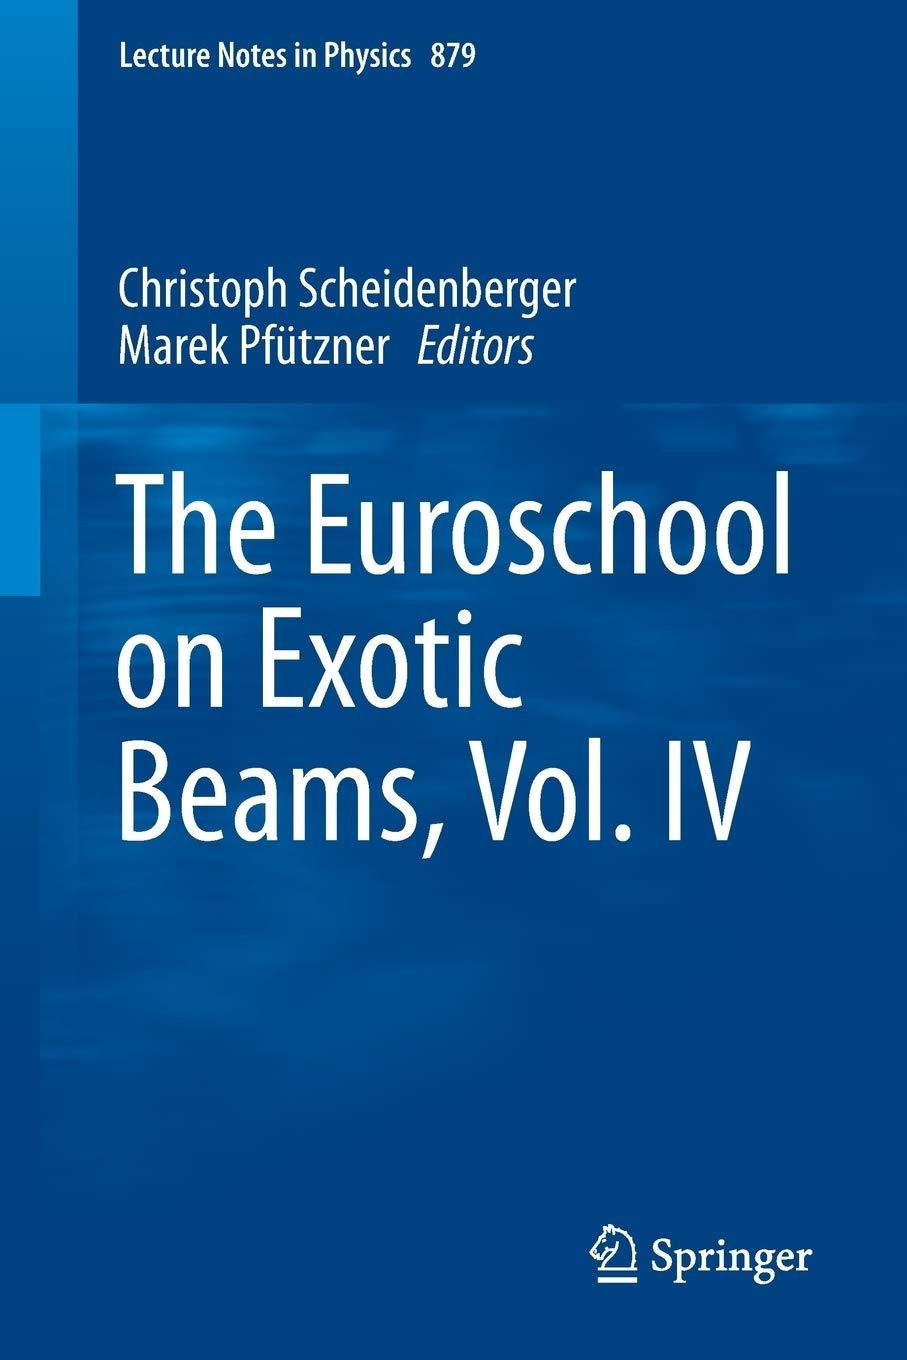 the euroschool on exotic beams vol. iv 1st edition christoph scheidenberger, marek pfützner 3642451403,